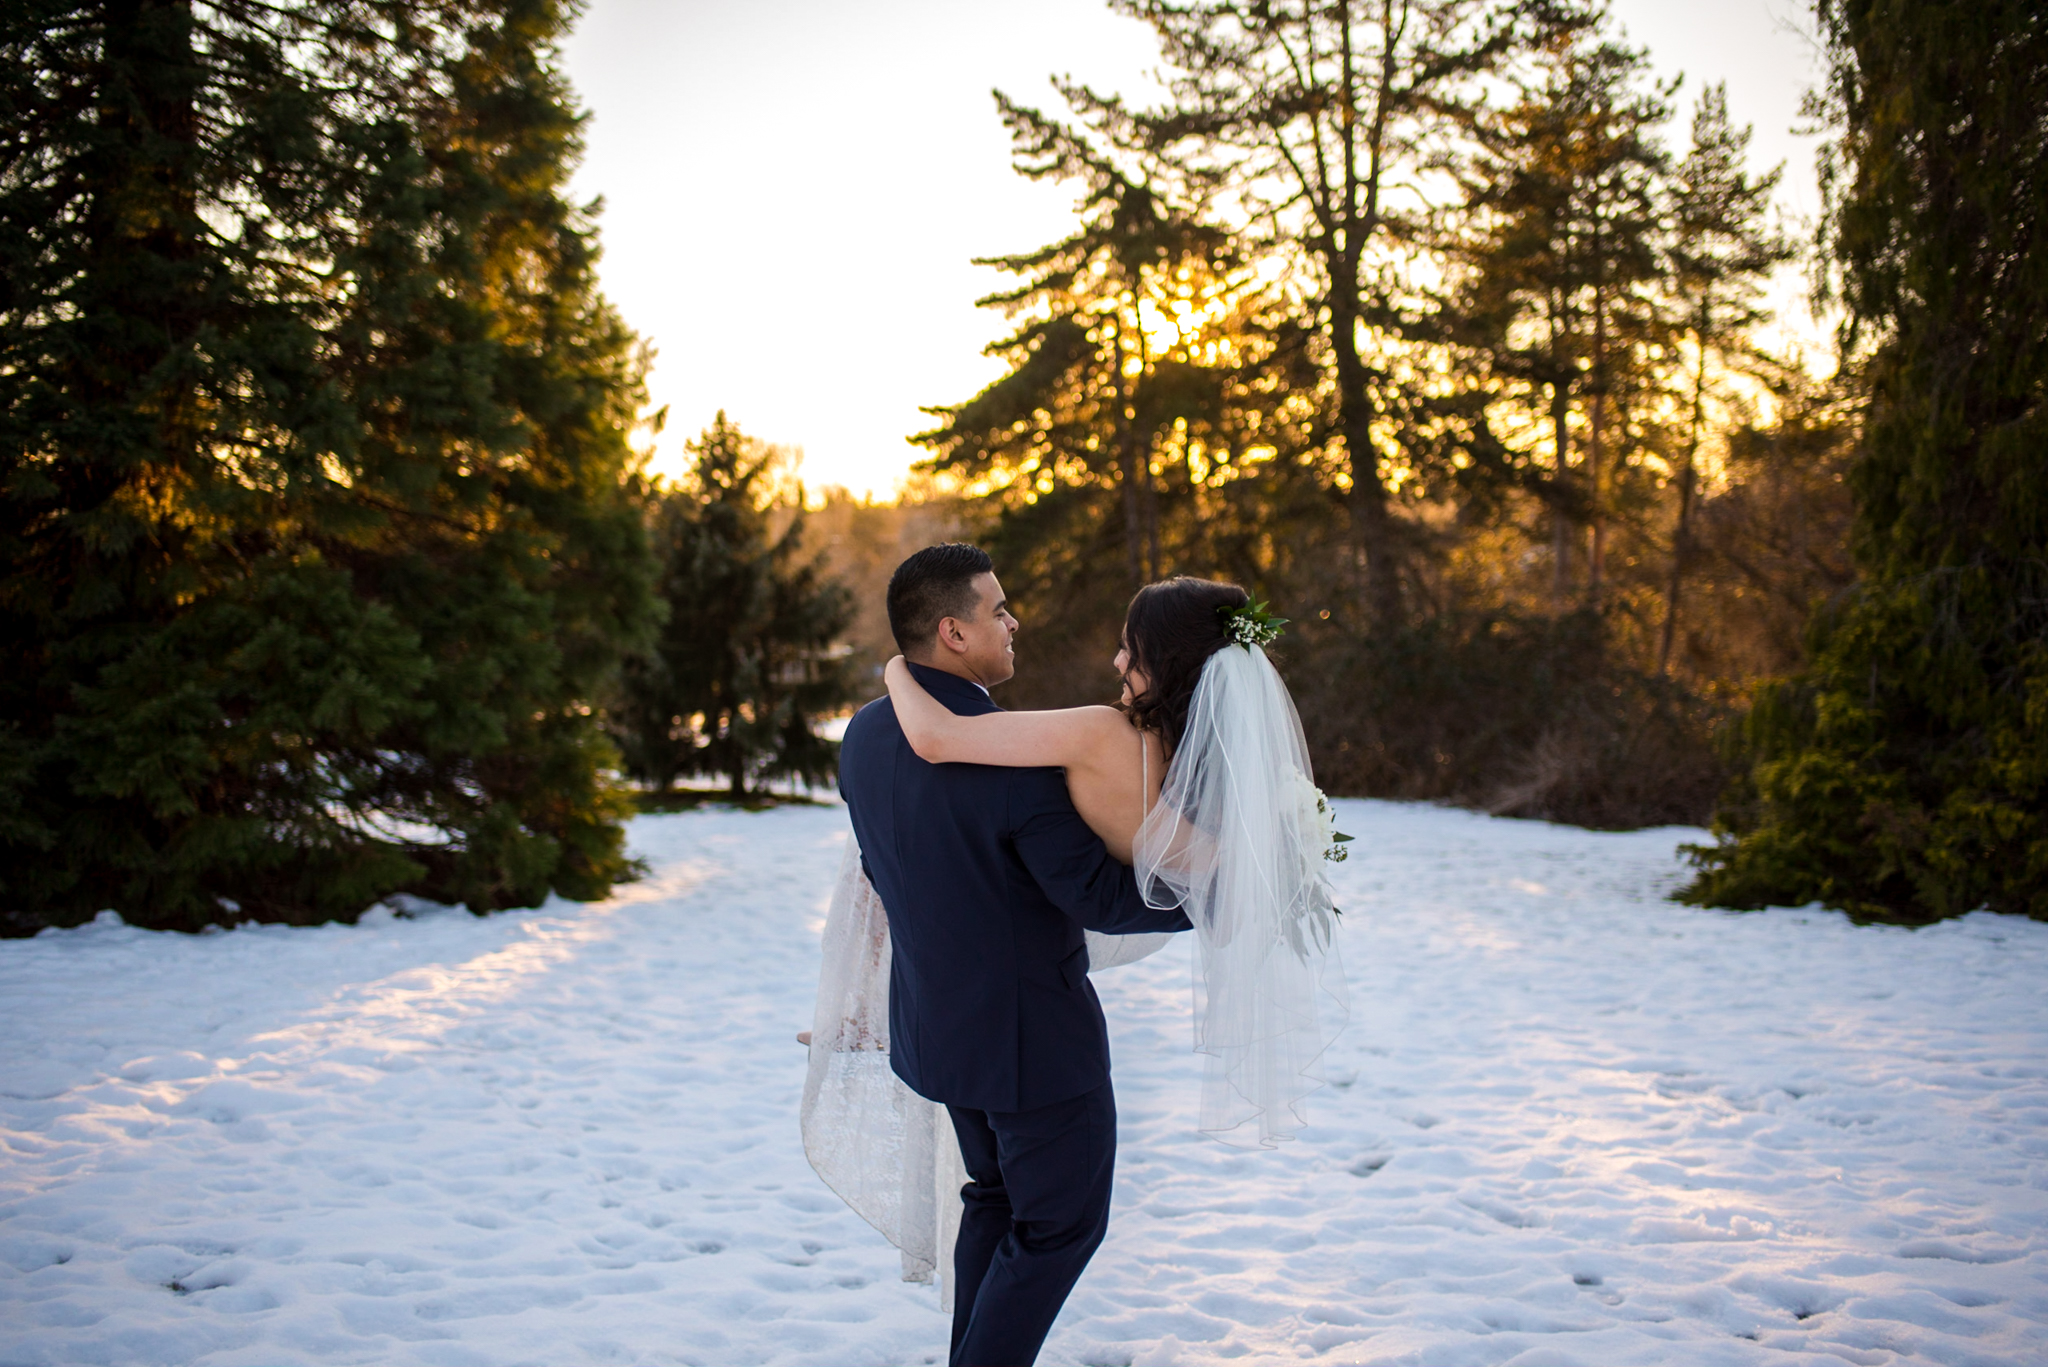 Queen Elizabeth Park Winter Wedding Photography in Vancouver BC